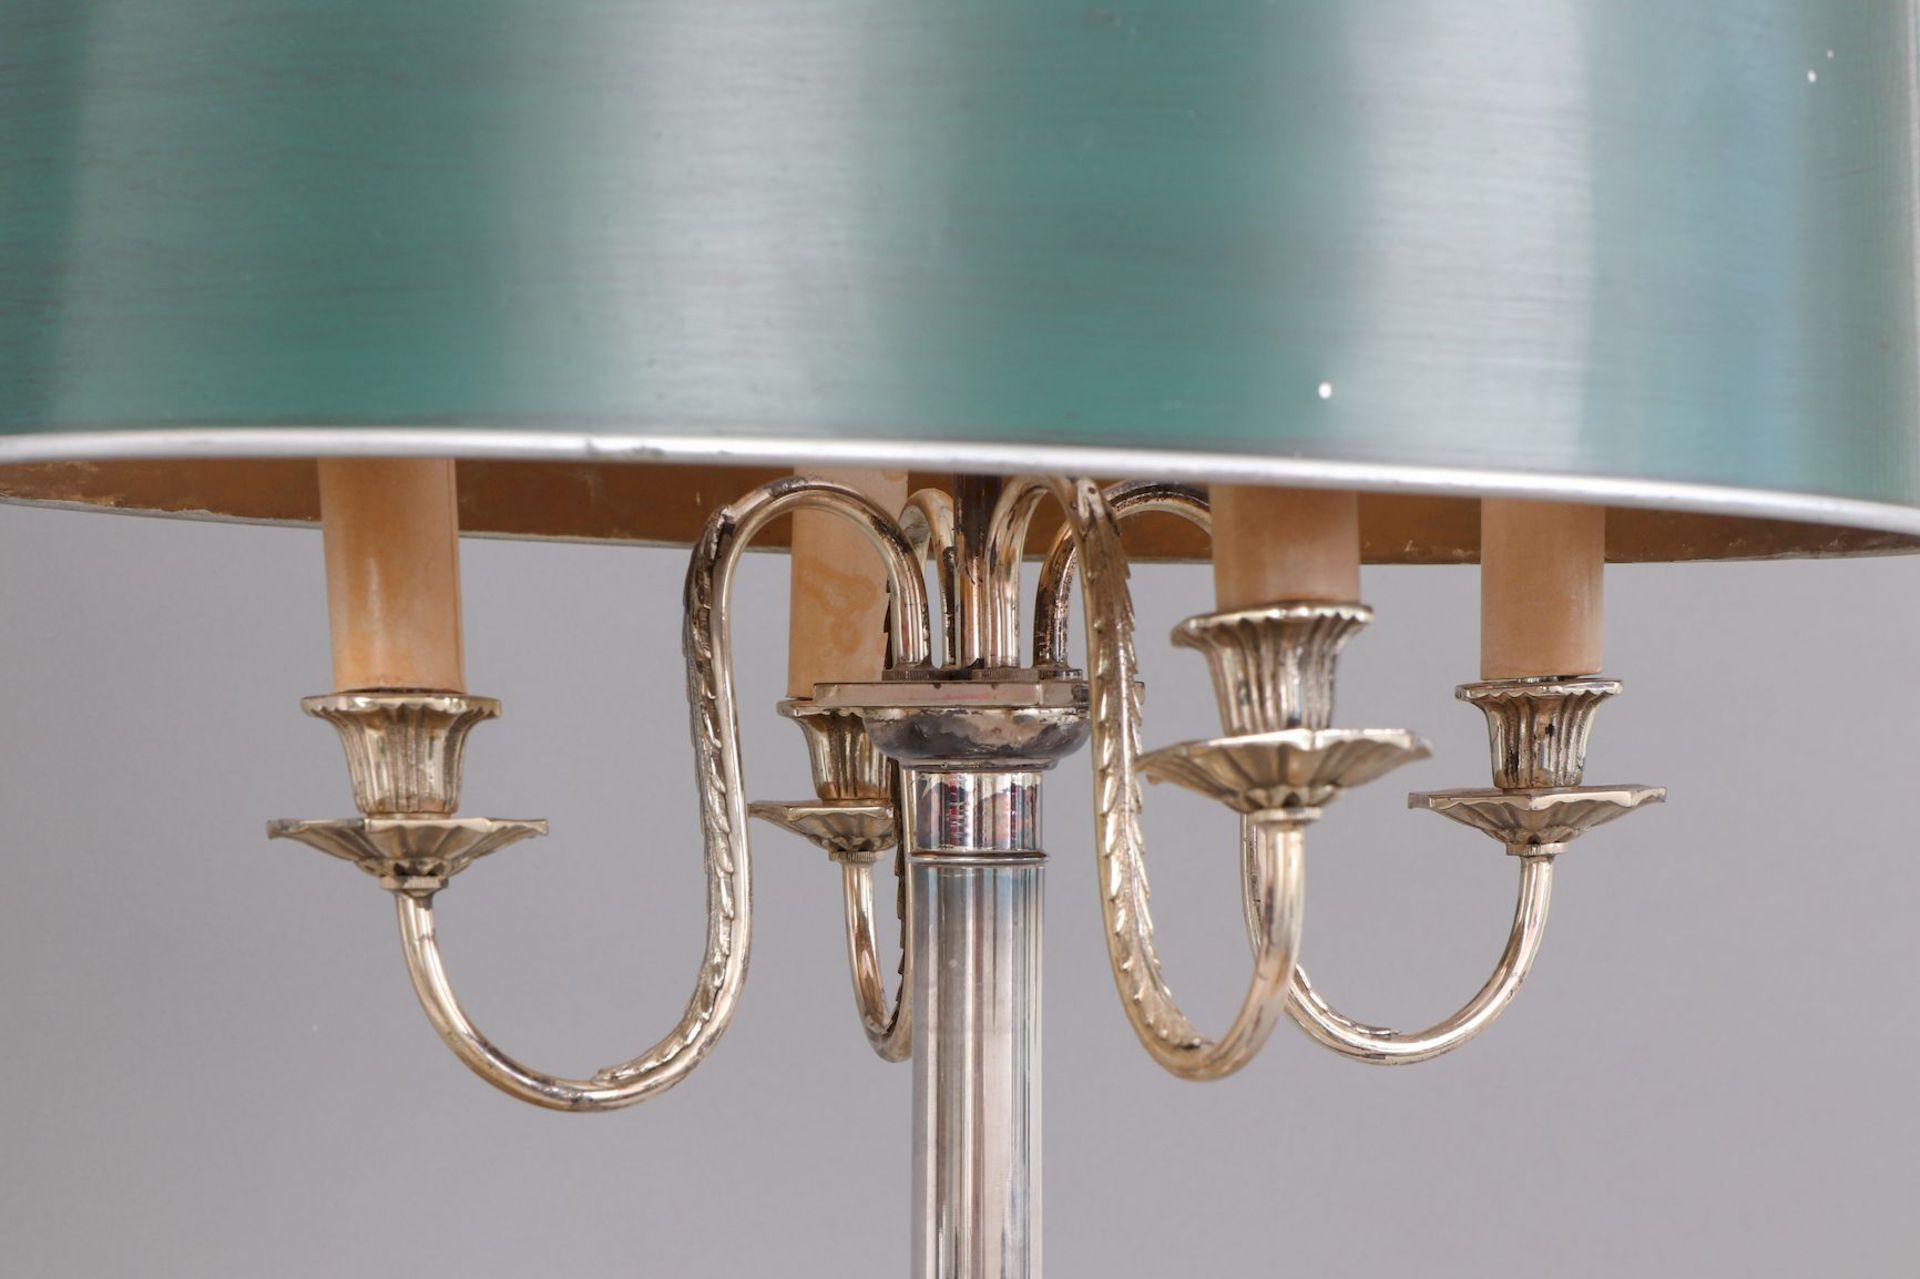 Tischlampe mit versilberten Säulenfuß - Image 3 of 5